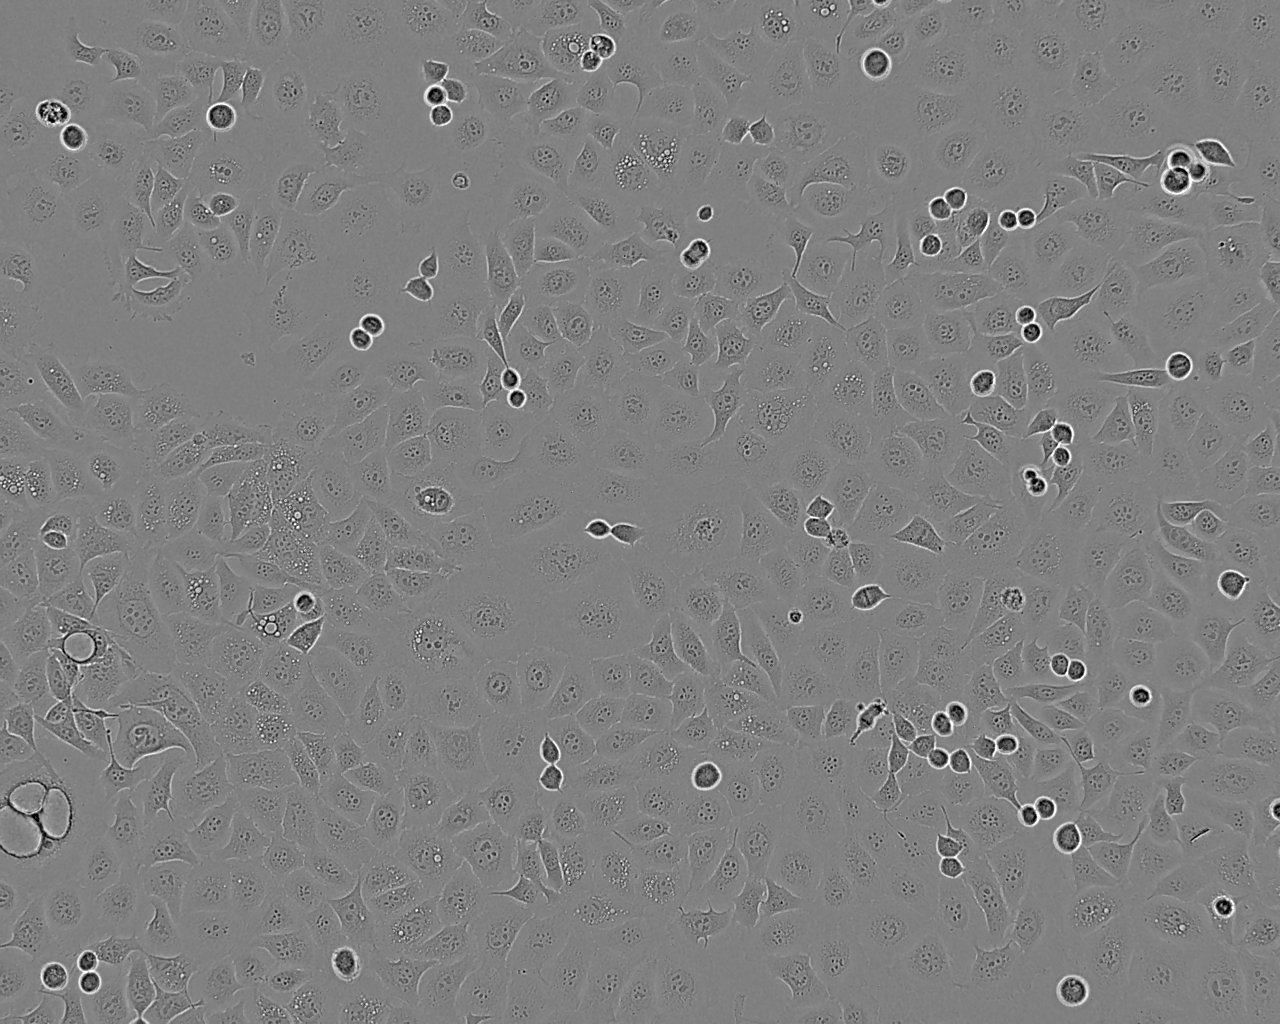 ACC-2 Cells(赠送Str鉴定报告)|人涎腺腺样囊性癌细胞,ACC-2 Cells